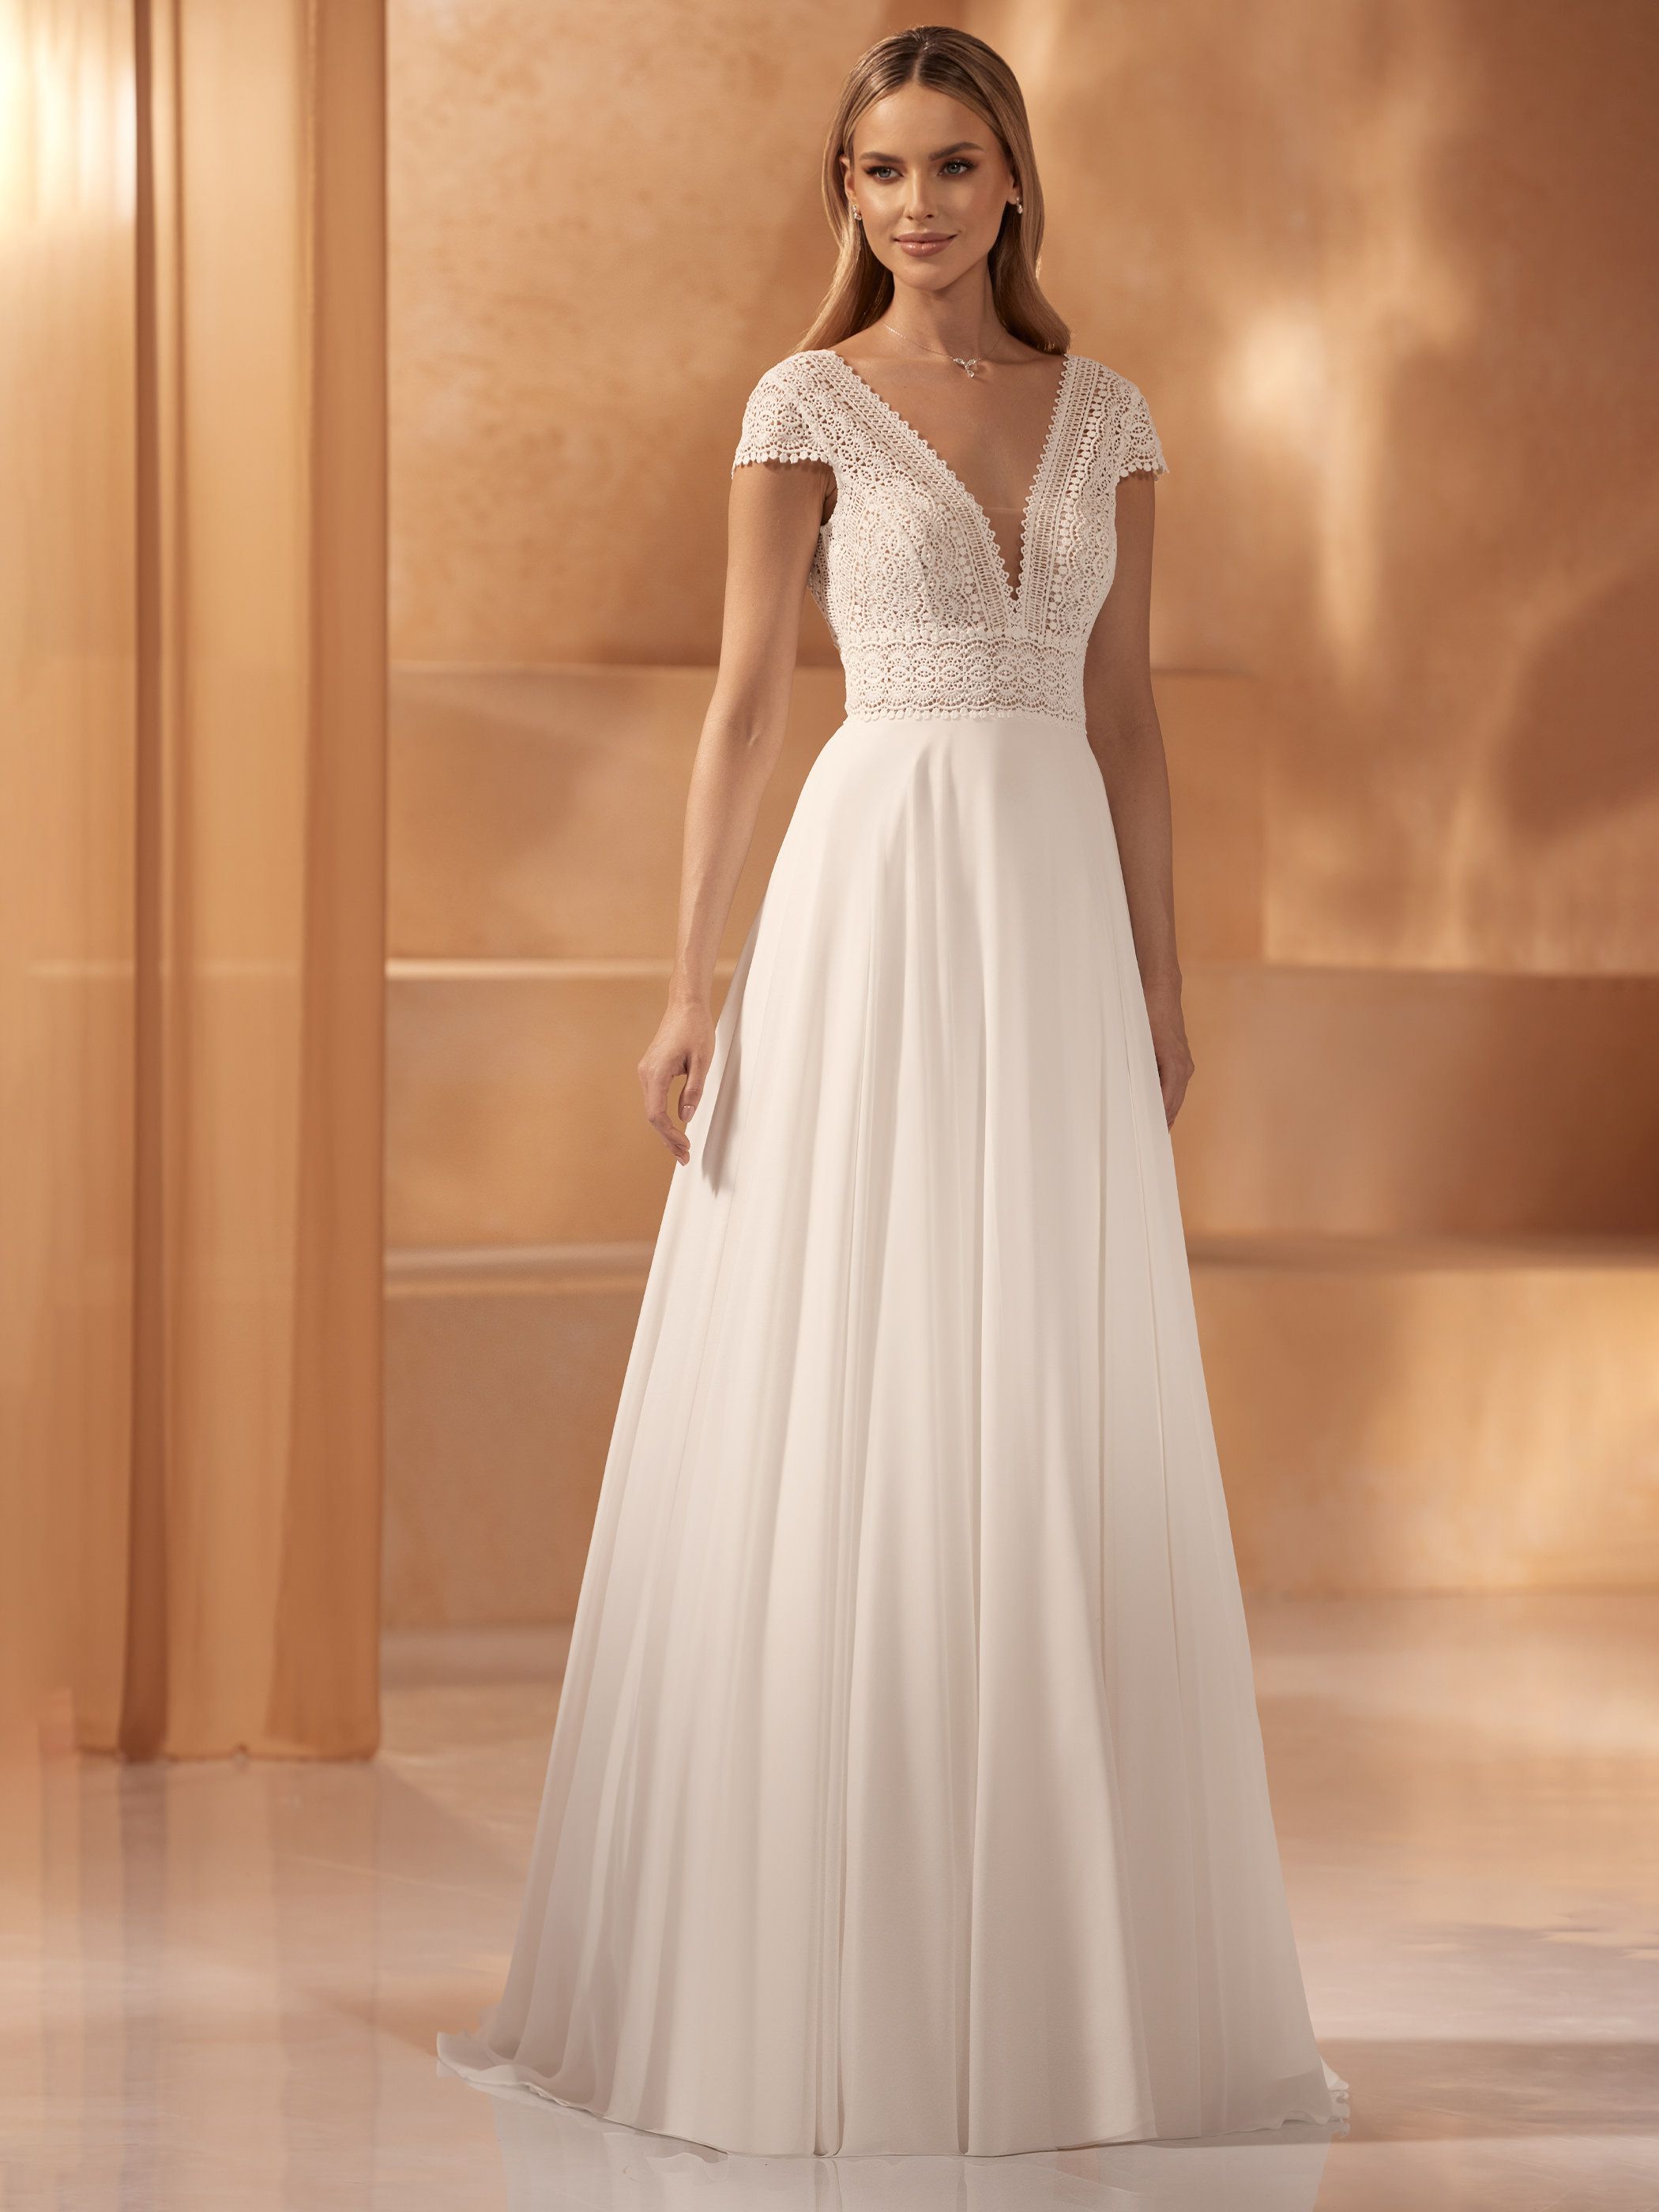 Norma wedding dress by Bianco Evento